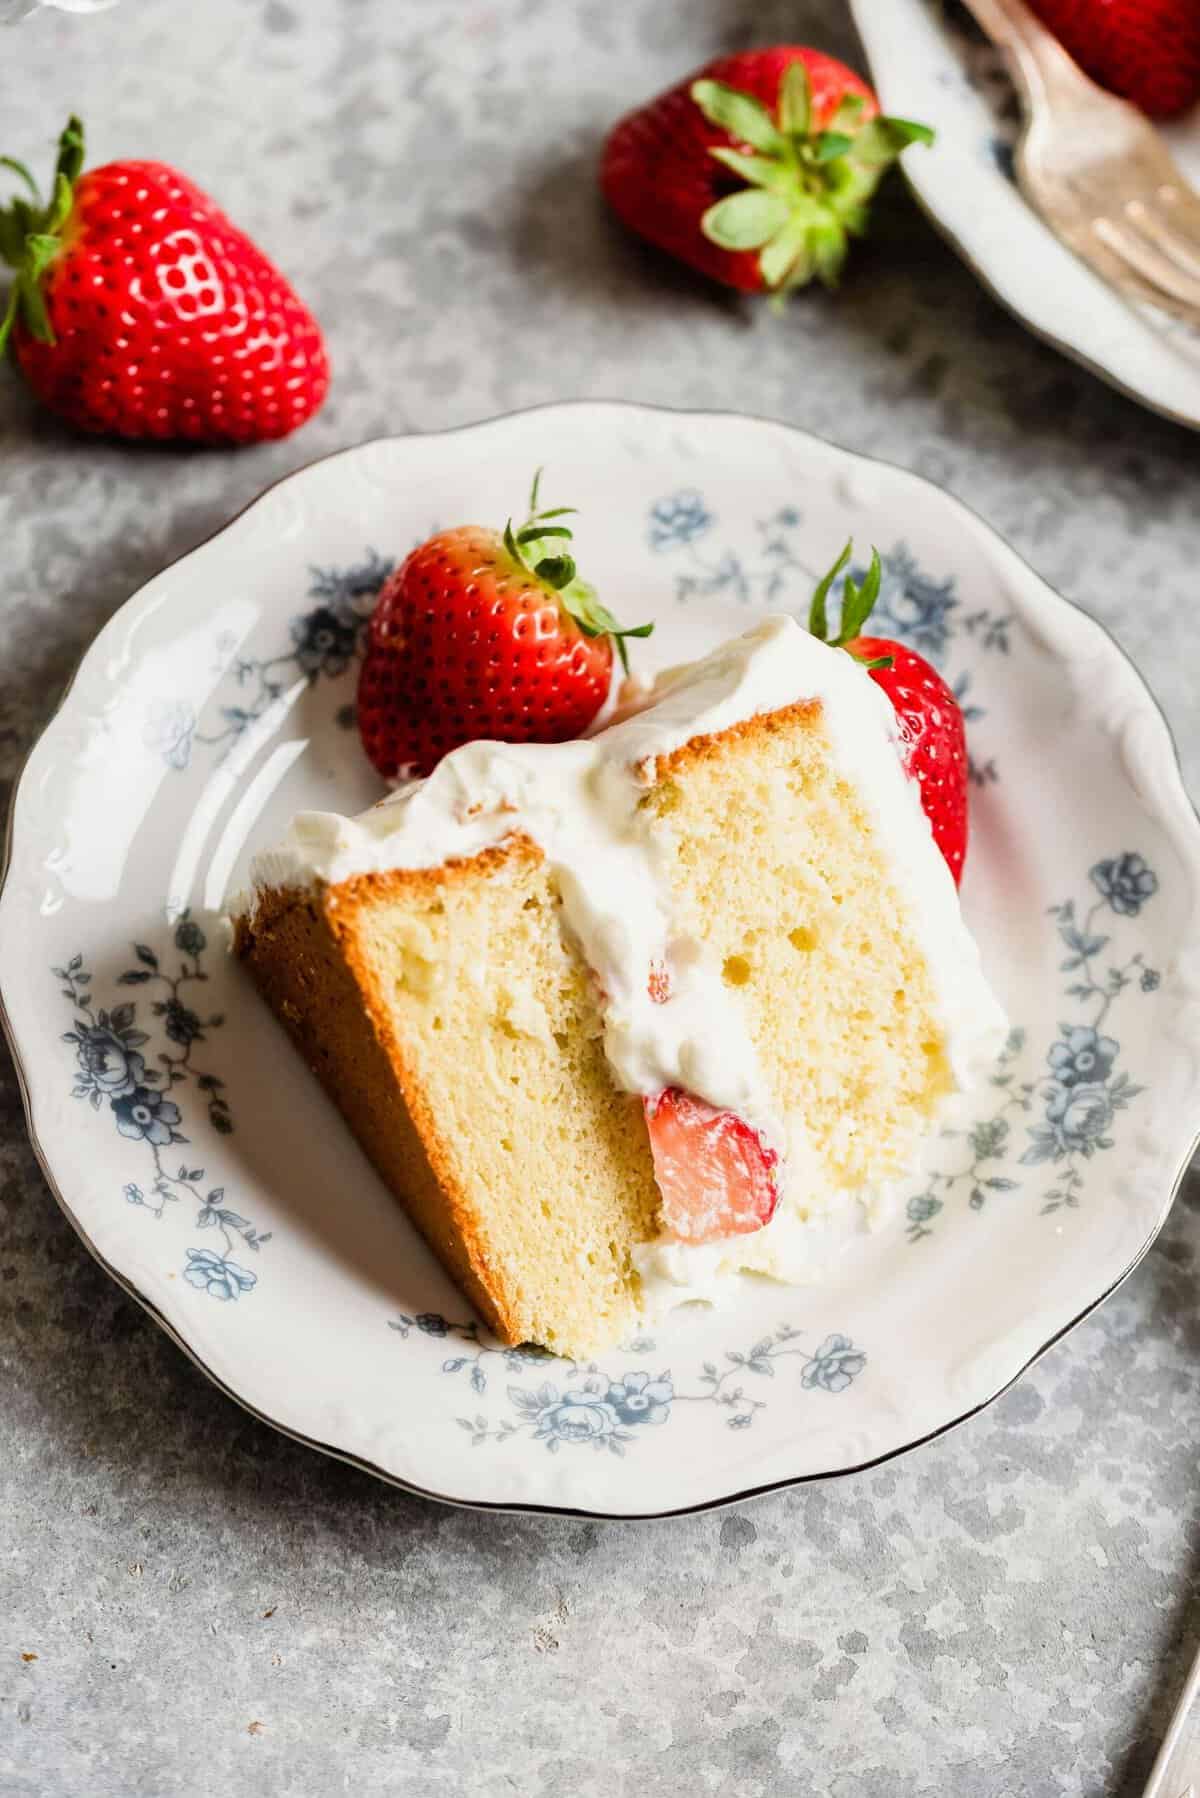 Slice of strawberry sponge cake on plate, garnished with fresh strawberries